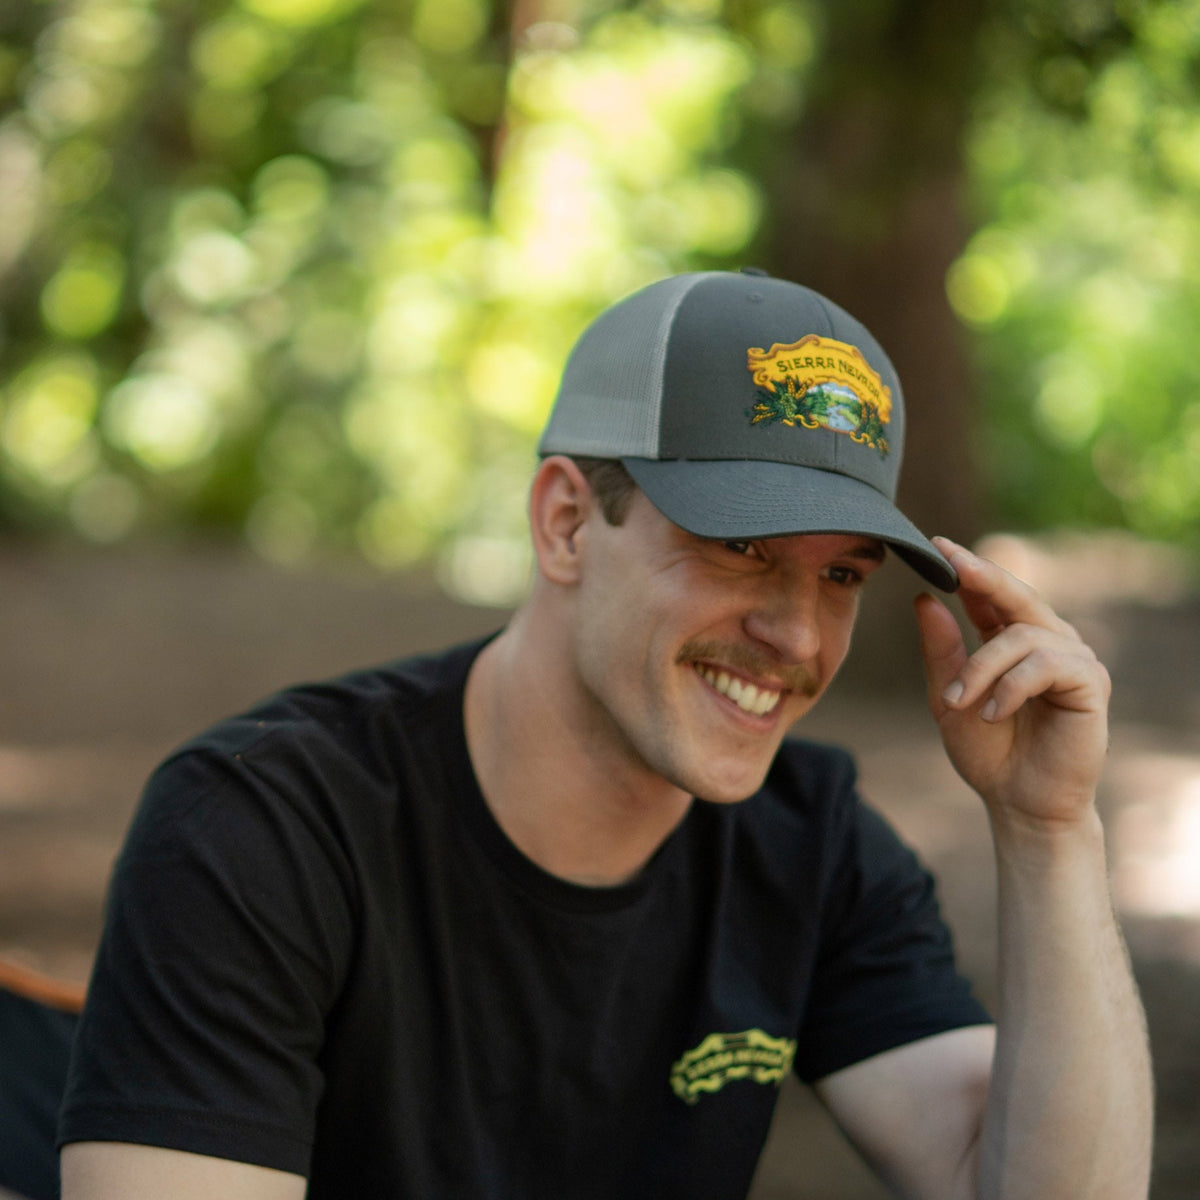 Sierra Nevada Brewing Co. Grey Trucker Hat worn by a man in a campground